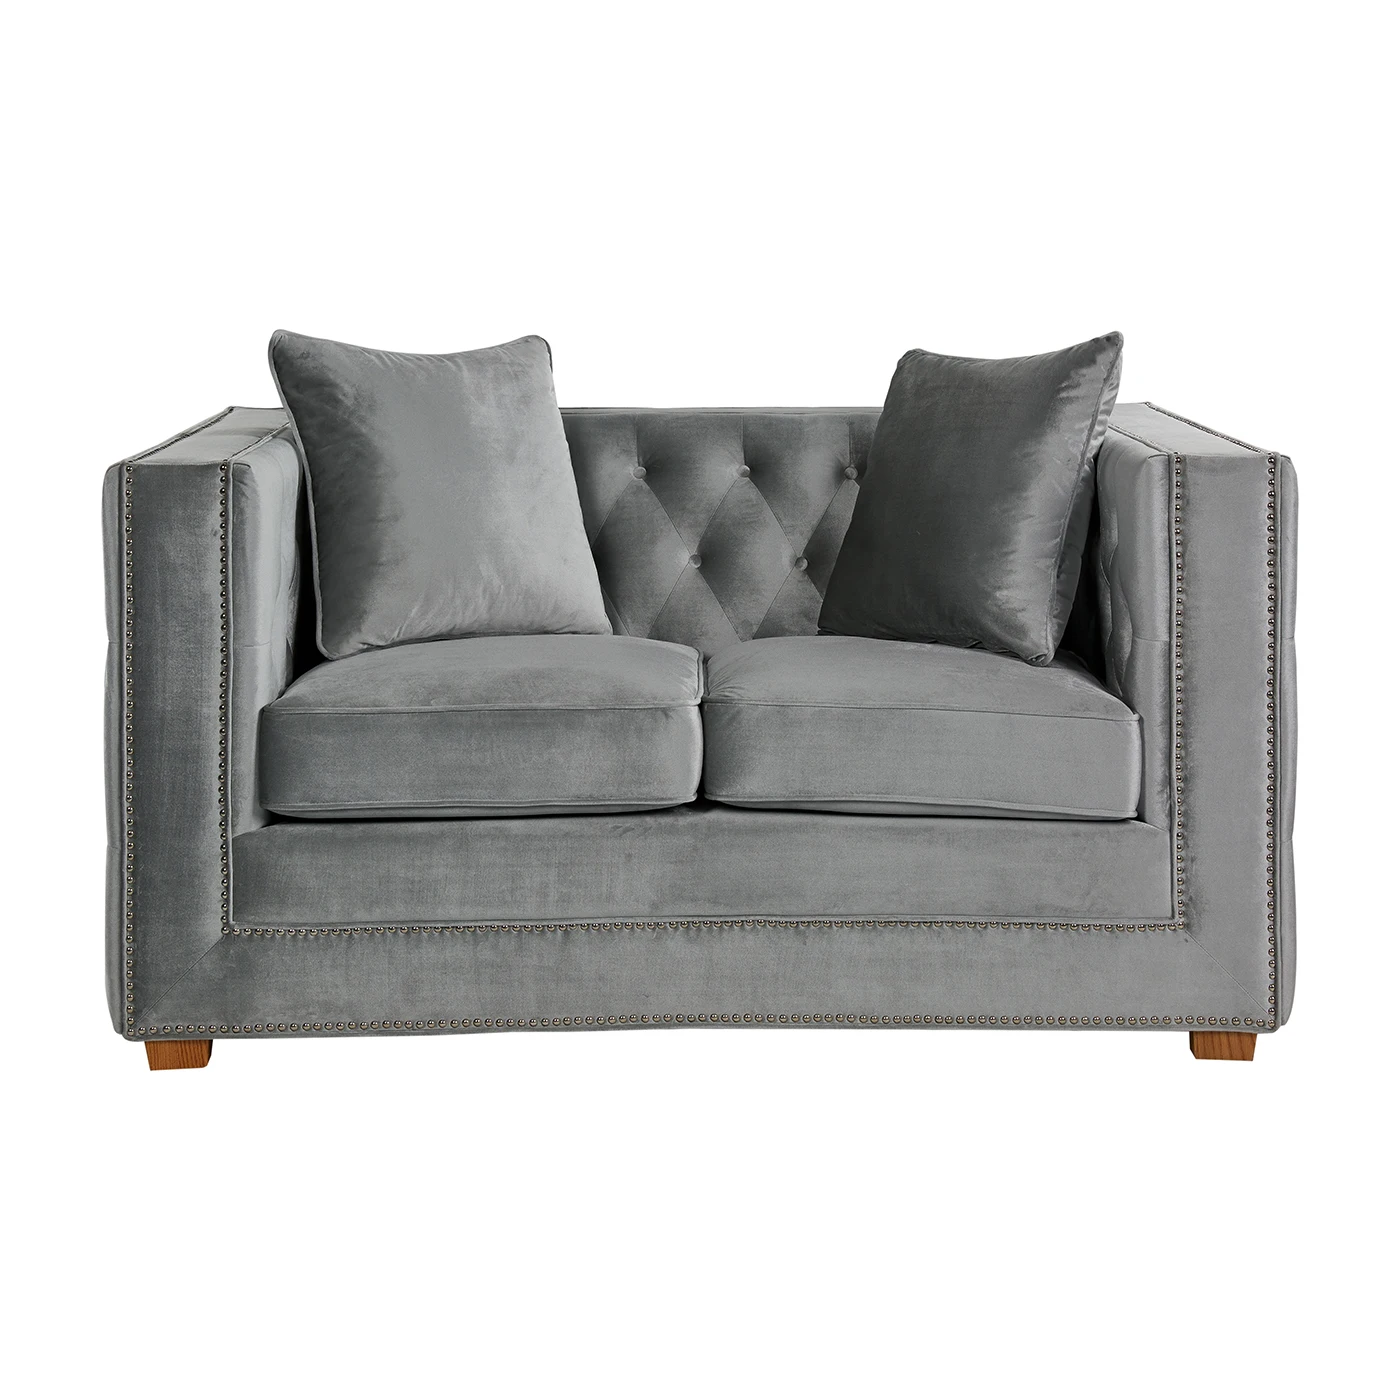 Europe Modern Design Sofa Chair Hot Selling Loveseat Luxury Furniture